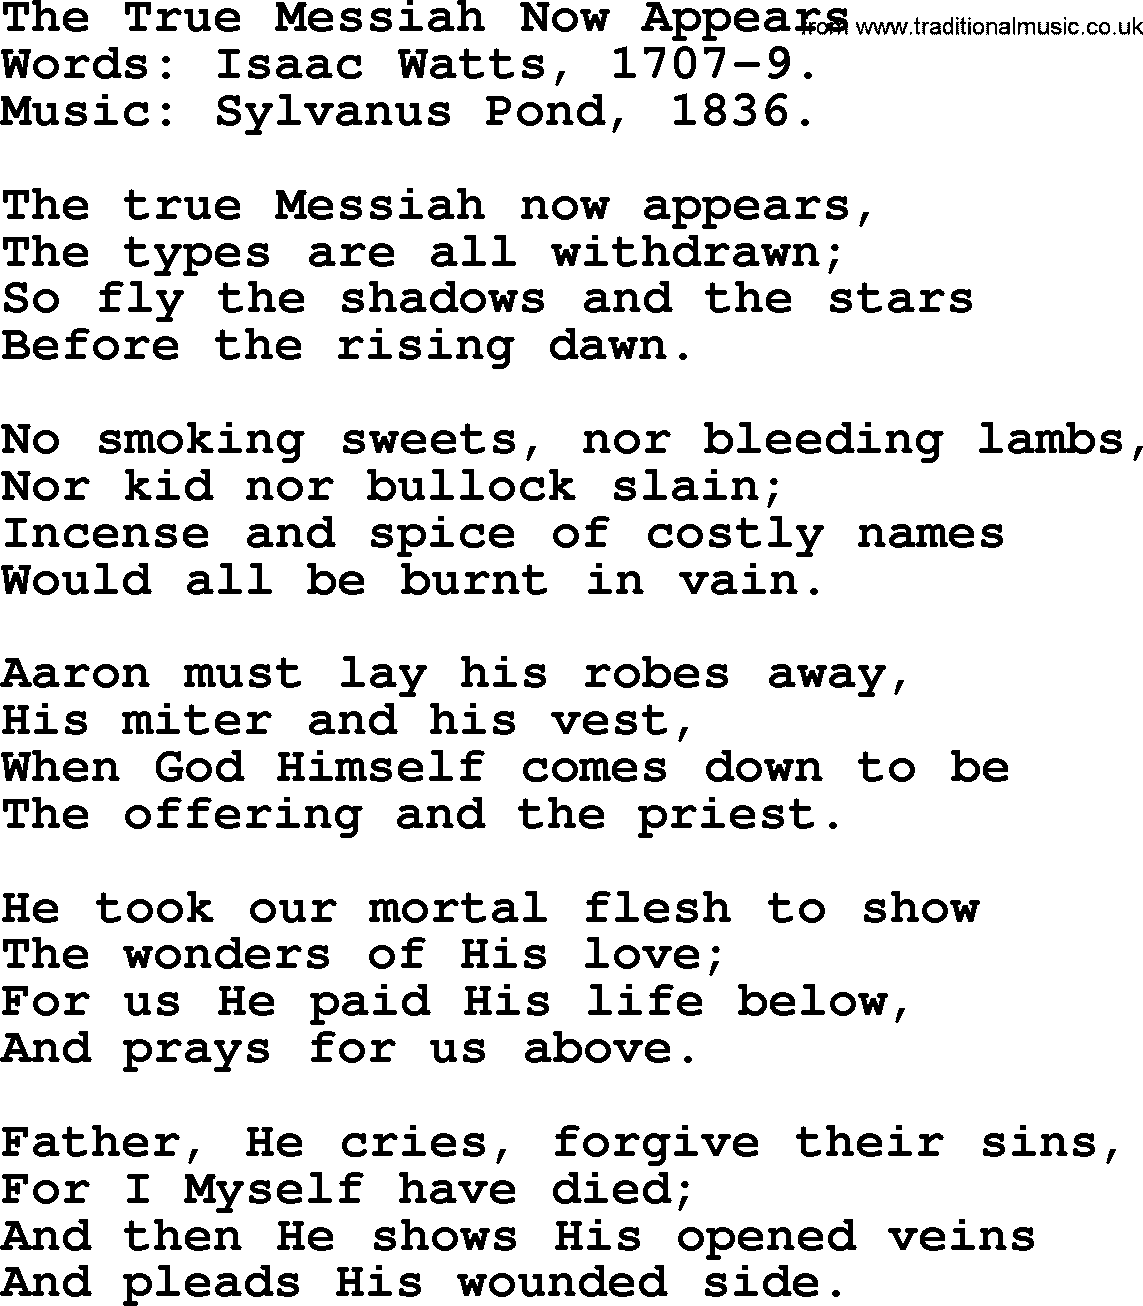 Isaac Watts Christian hymn: The True Messiah Now Appears- lyricss